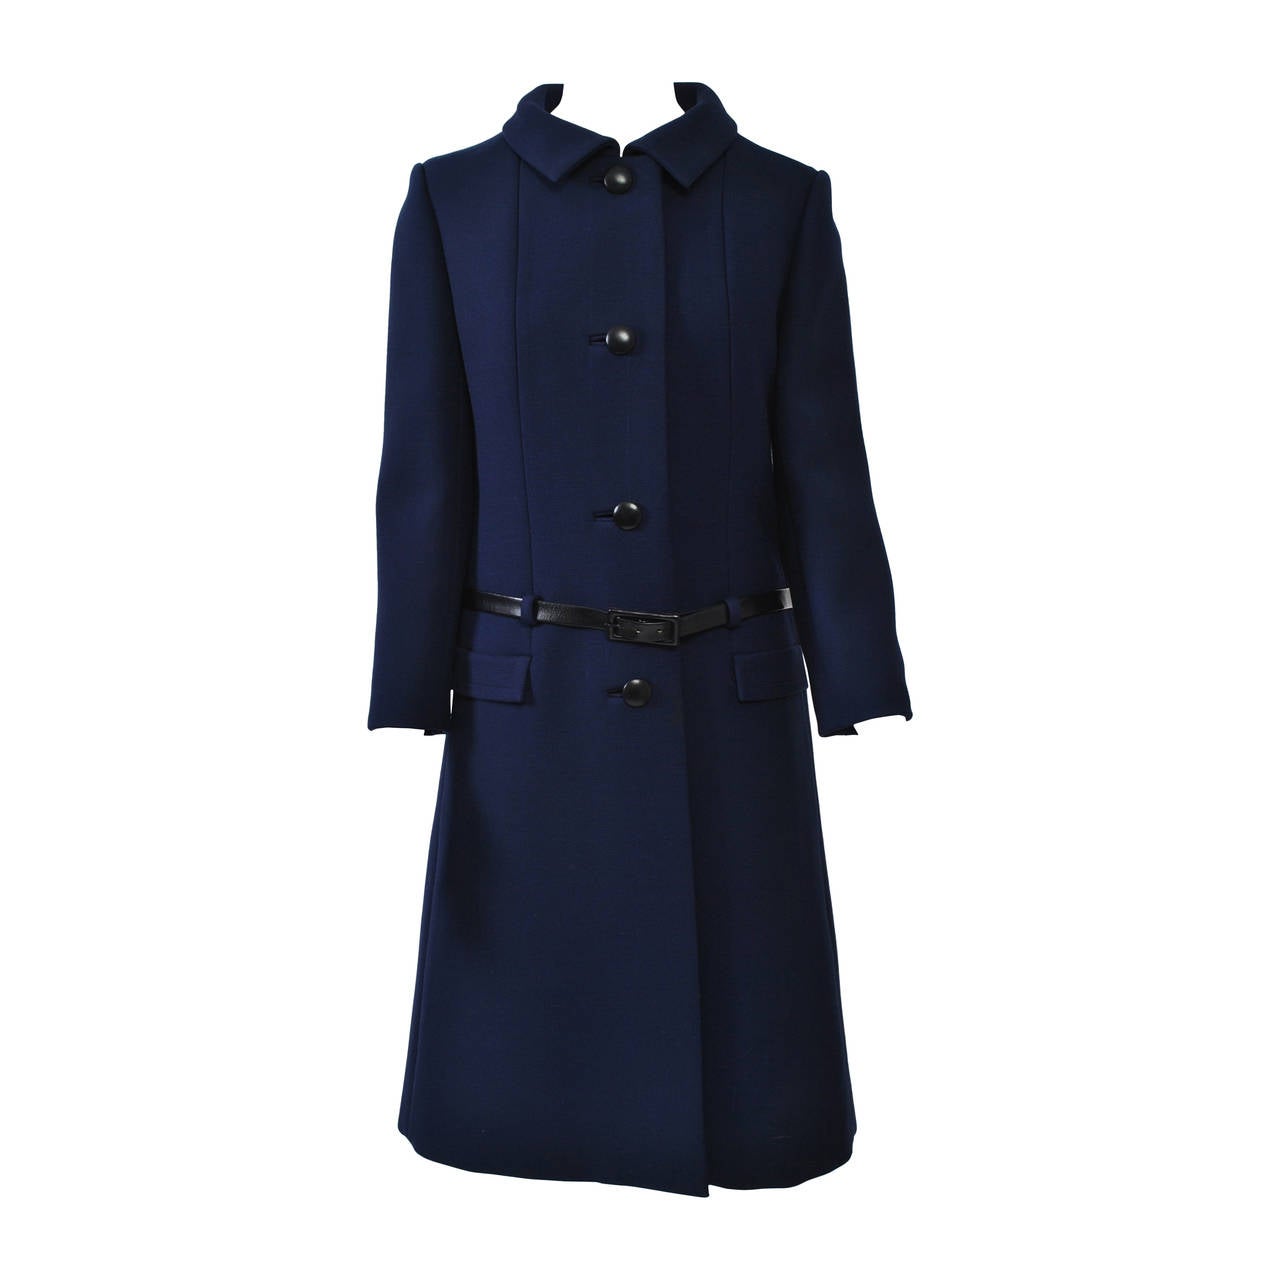 Originala 1960s Coat and Dress